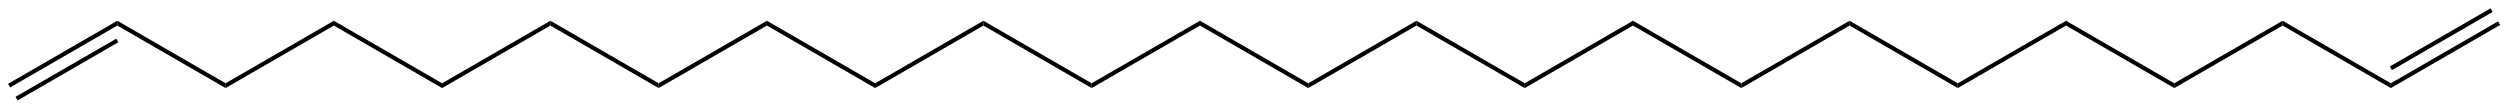 Image of 1,23-tetracosadiene